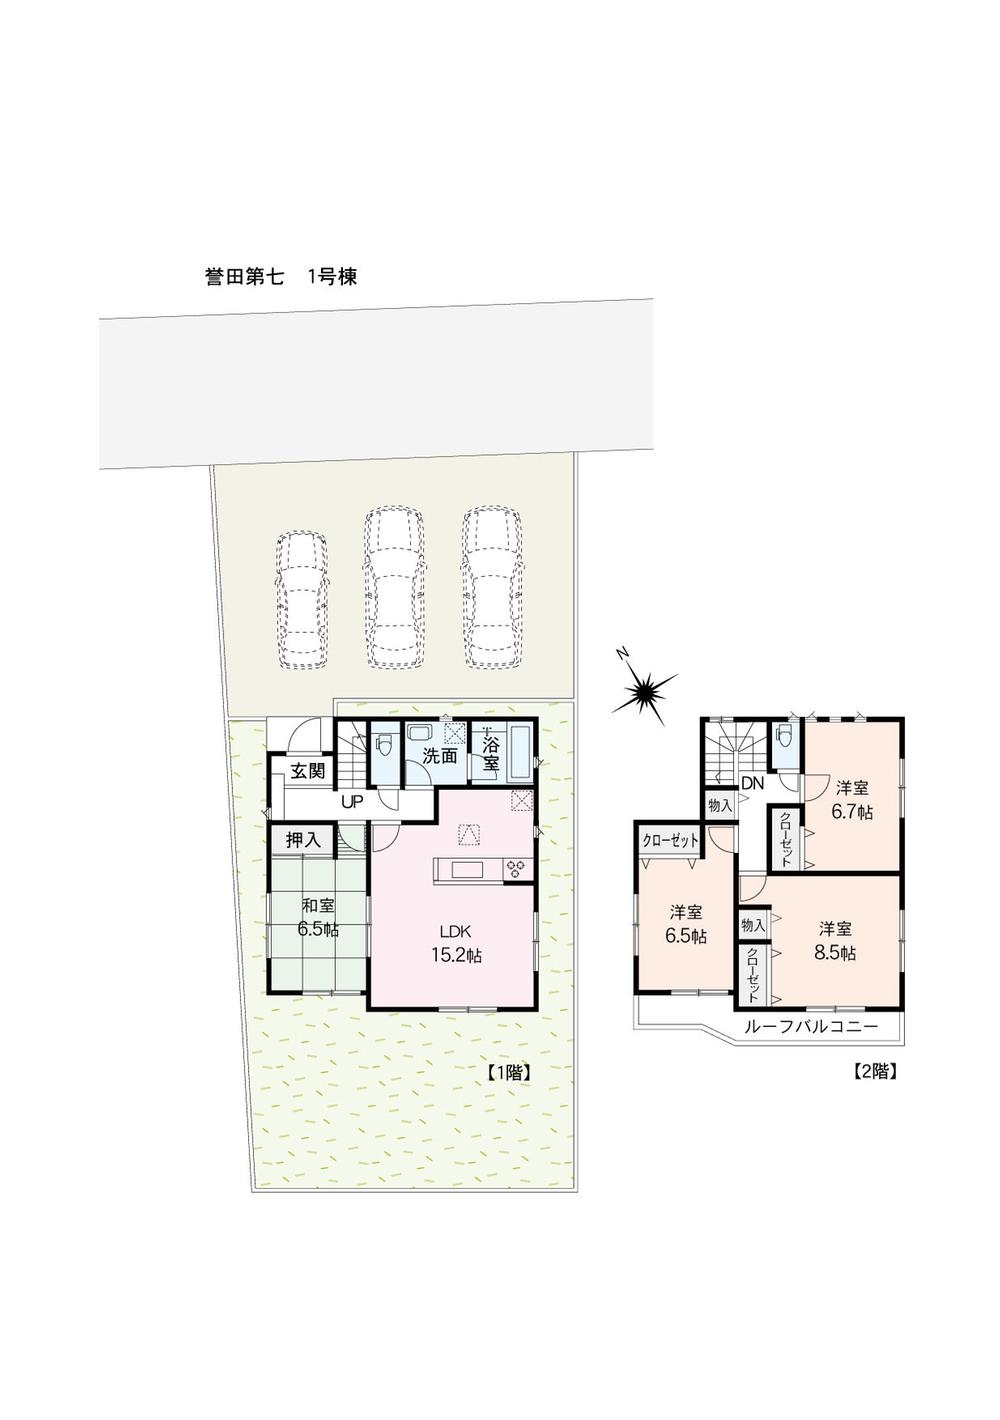 Floor plan. 21,800,000 yen, 4LDK, Land area 176.8 sq m , Building area 100.43 sq m all room 6 quires more, 8.5 Pledge of main bedroom room! Bright Floor.